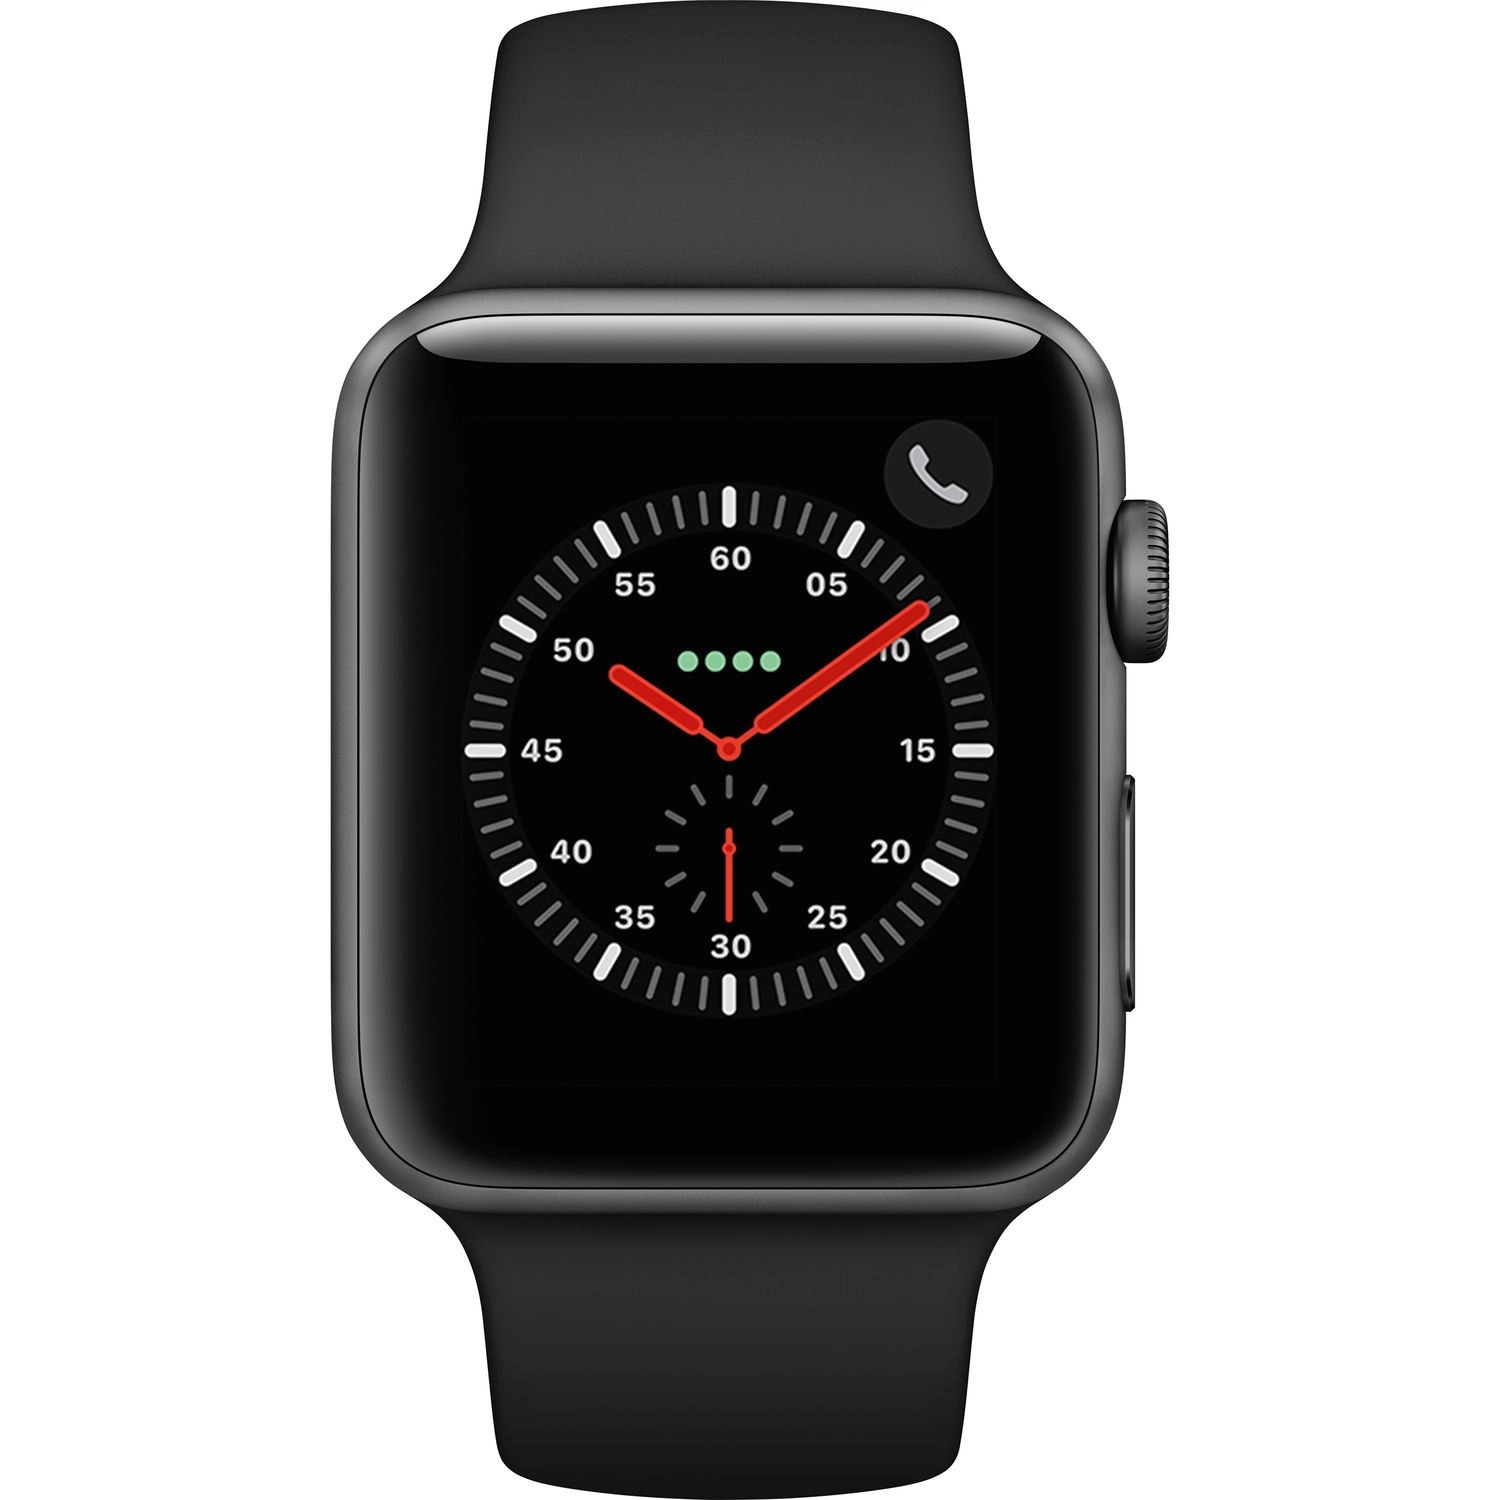 Apple-Watch-Series-4-1